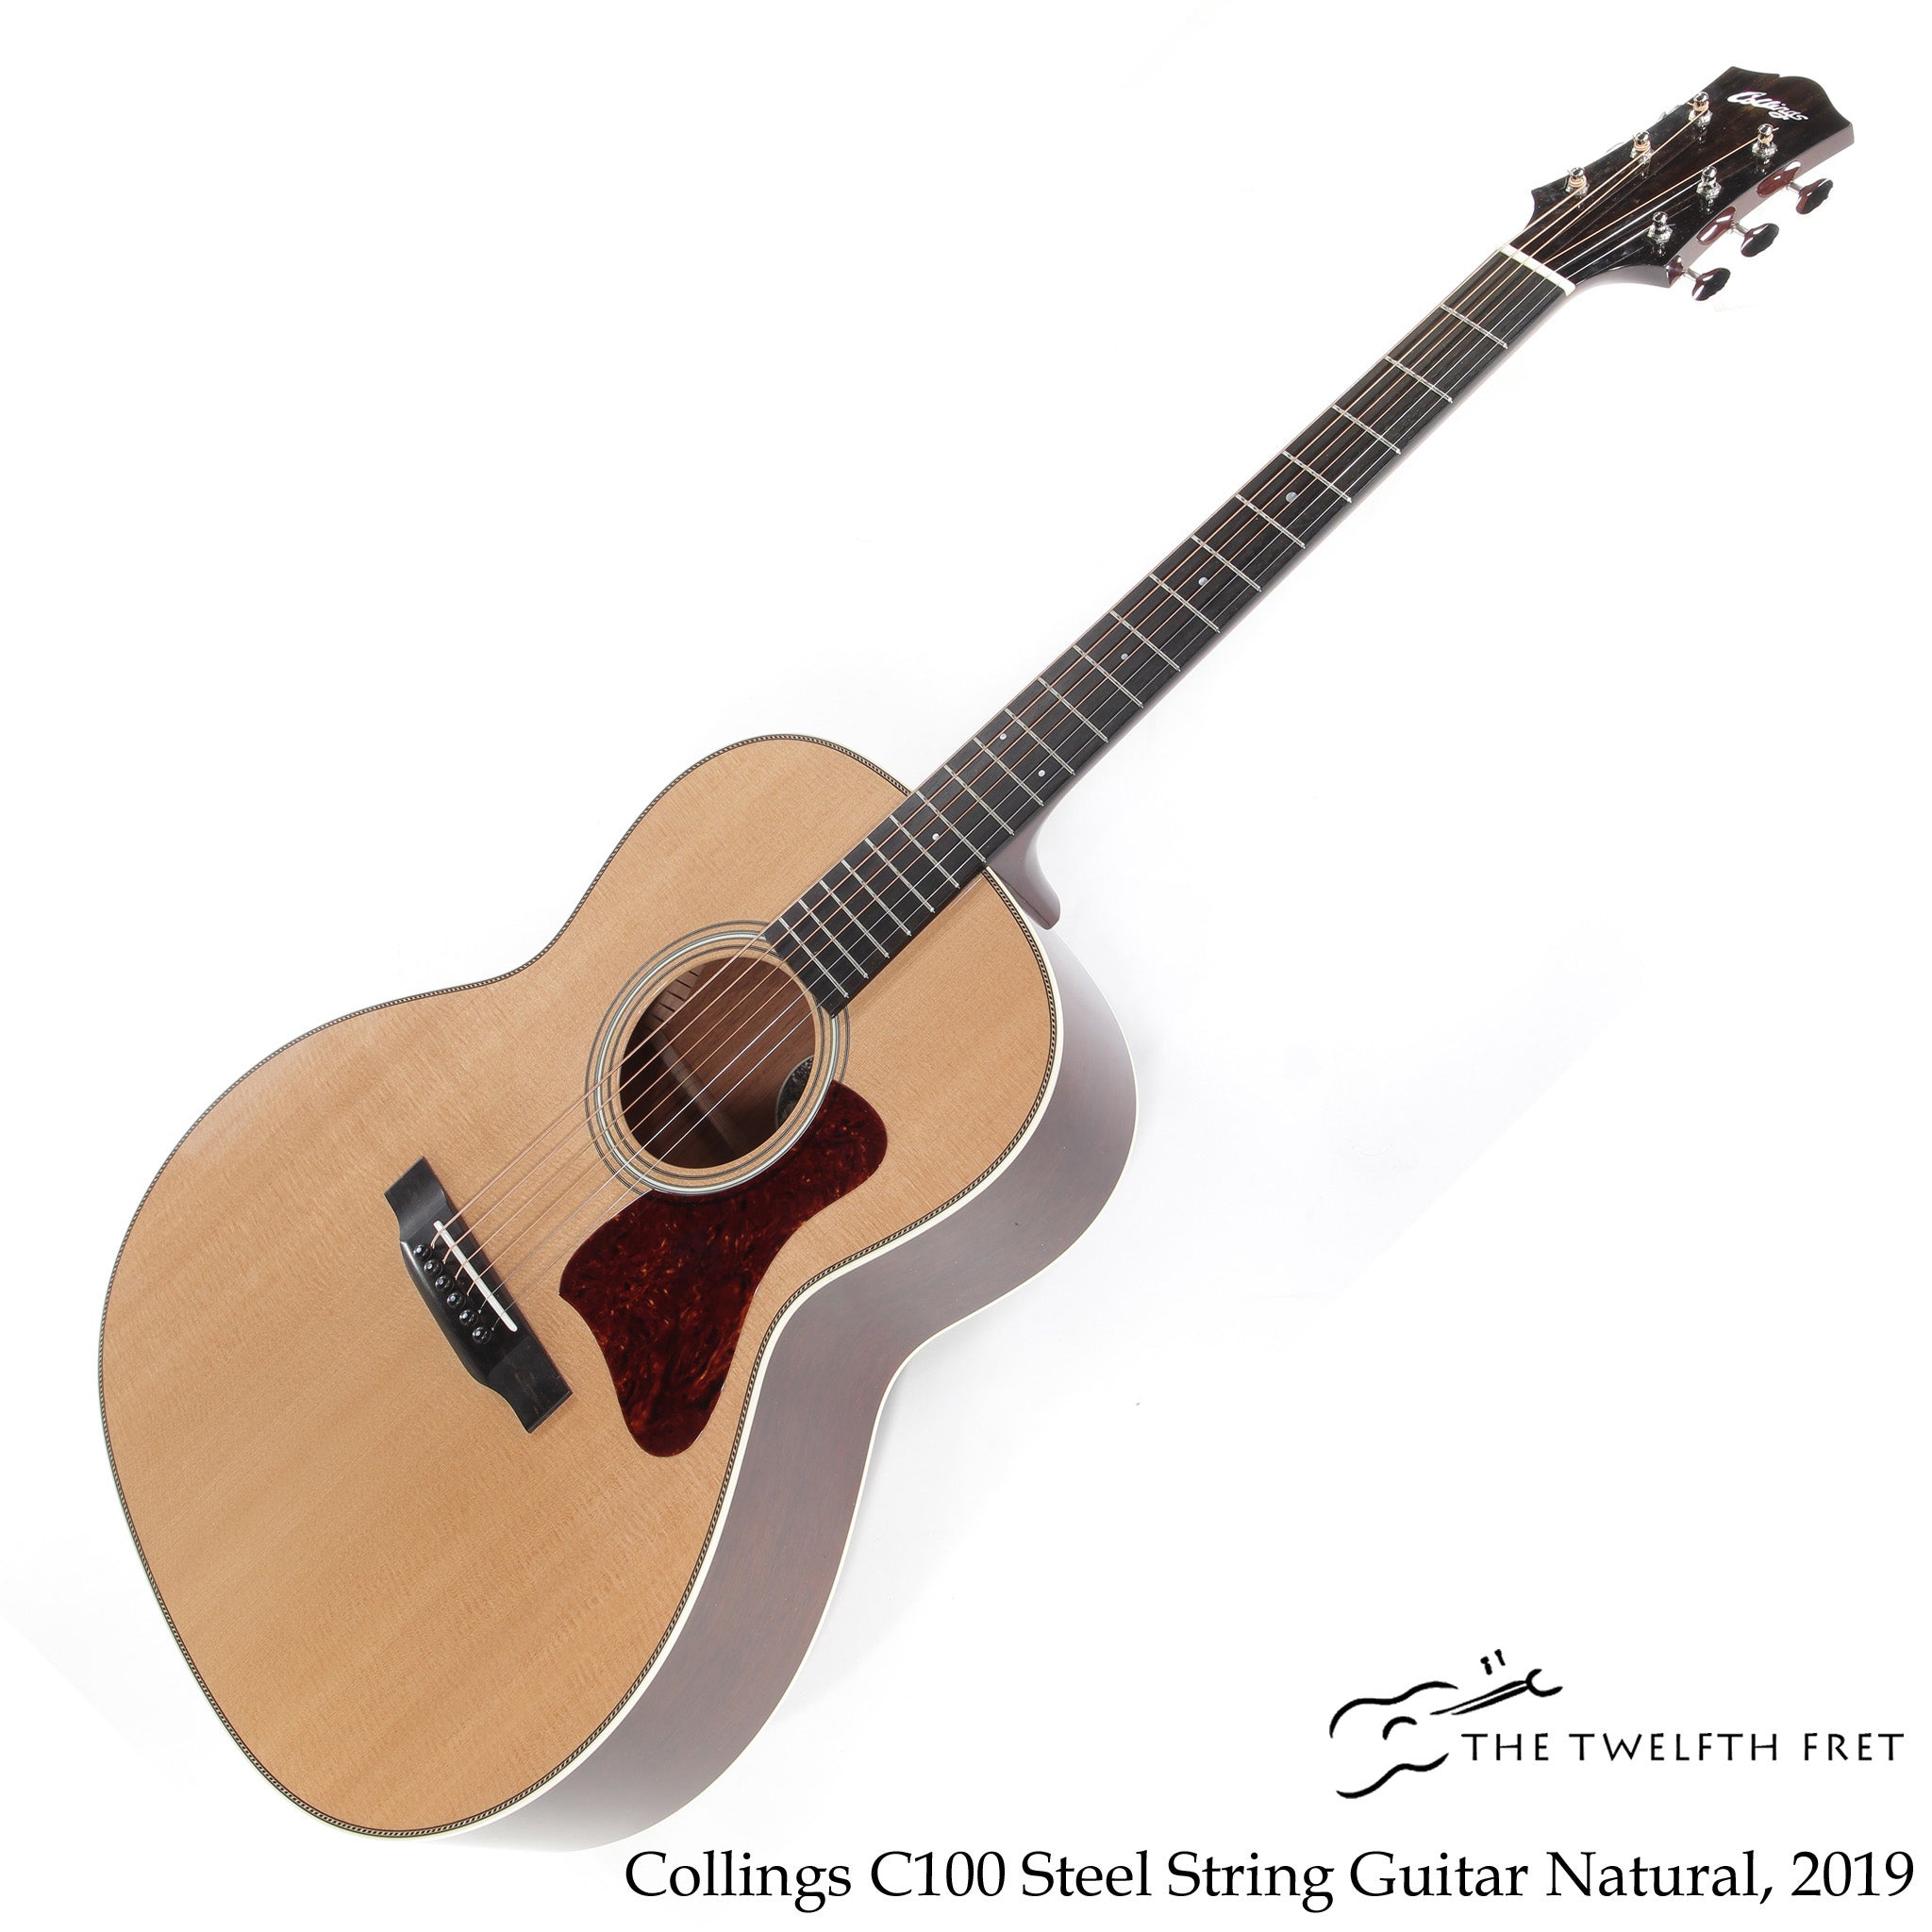 Collings C100 Steel String Guitar Natural 2019